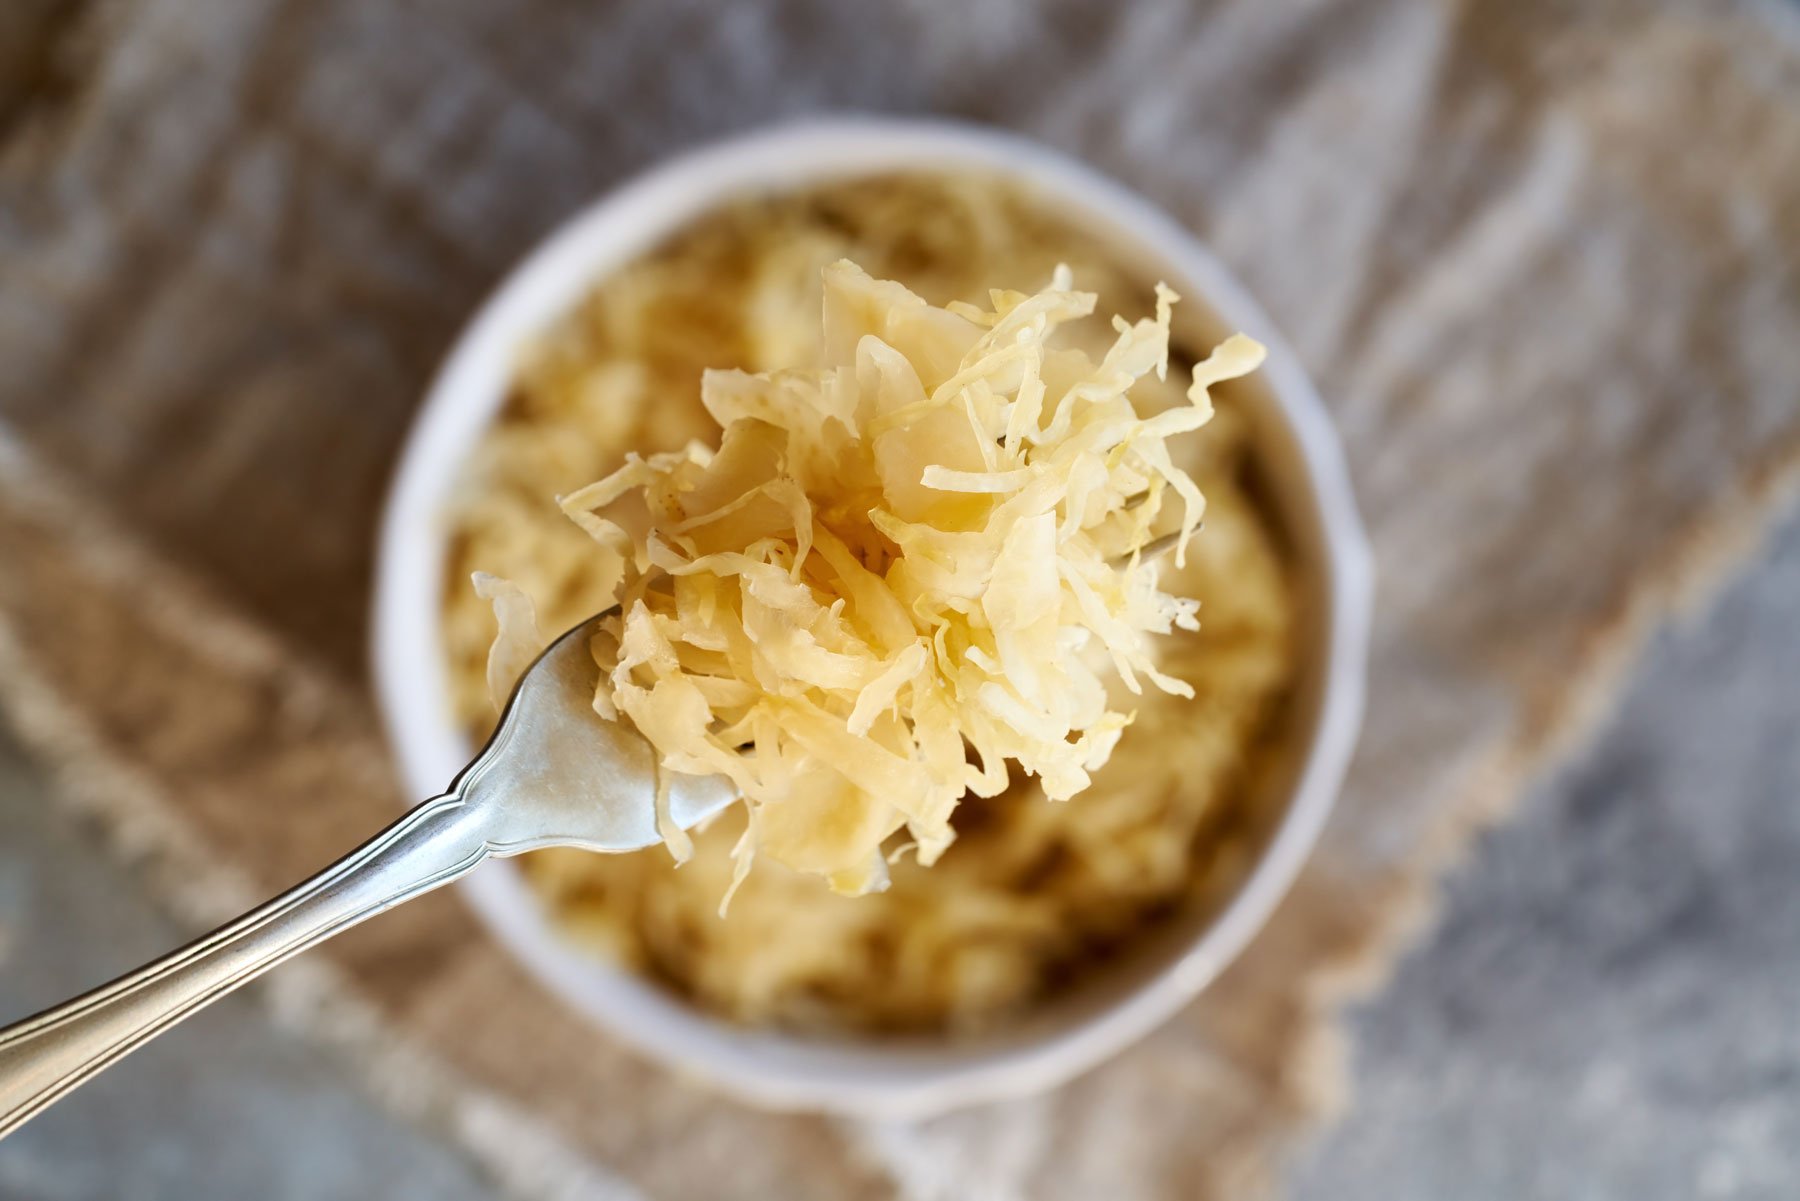 Foods we love: Sauerkraut